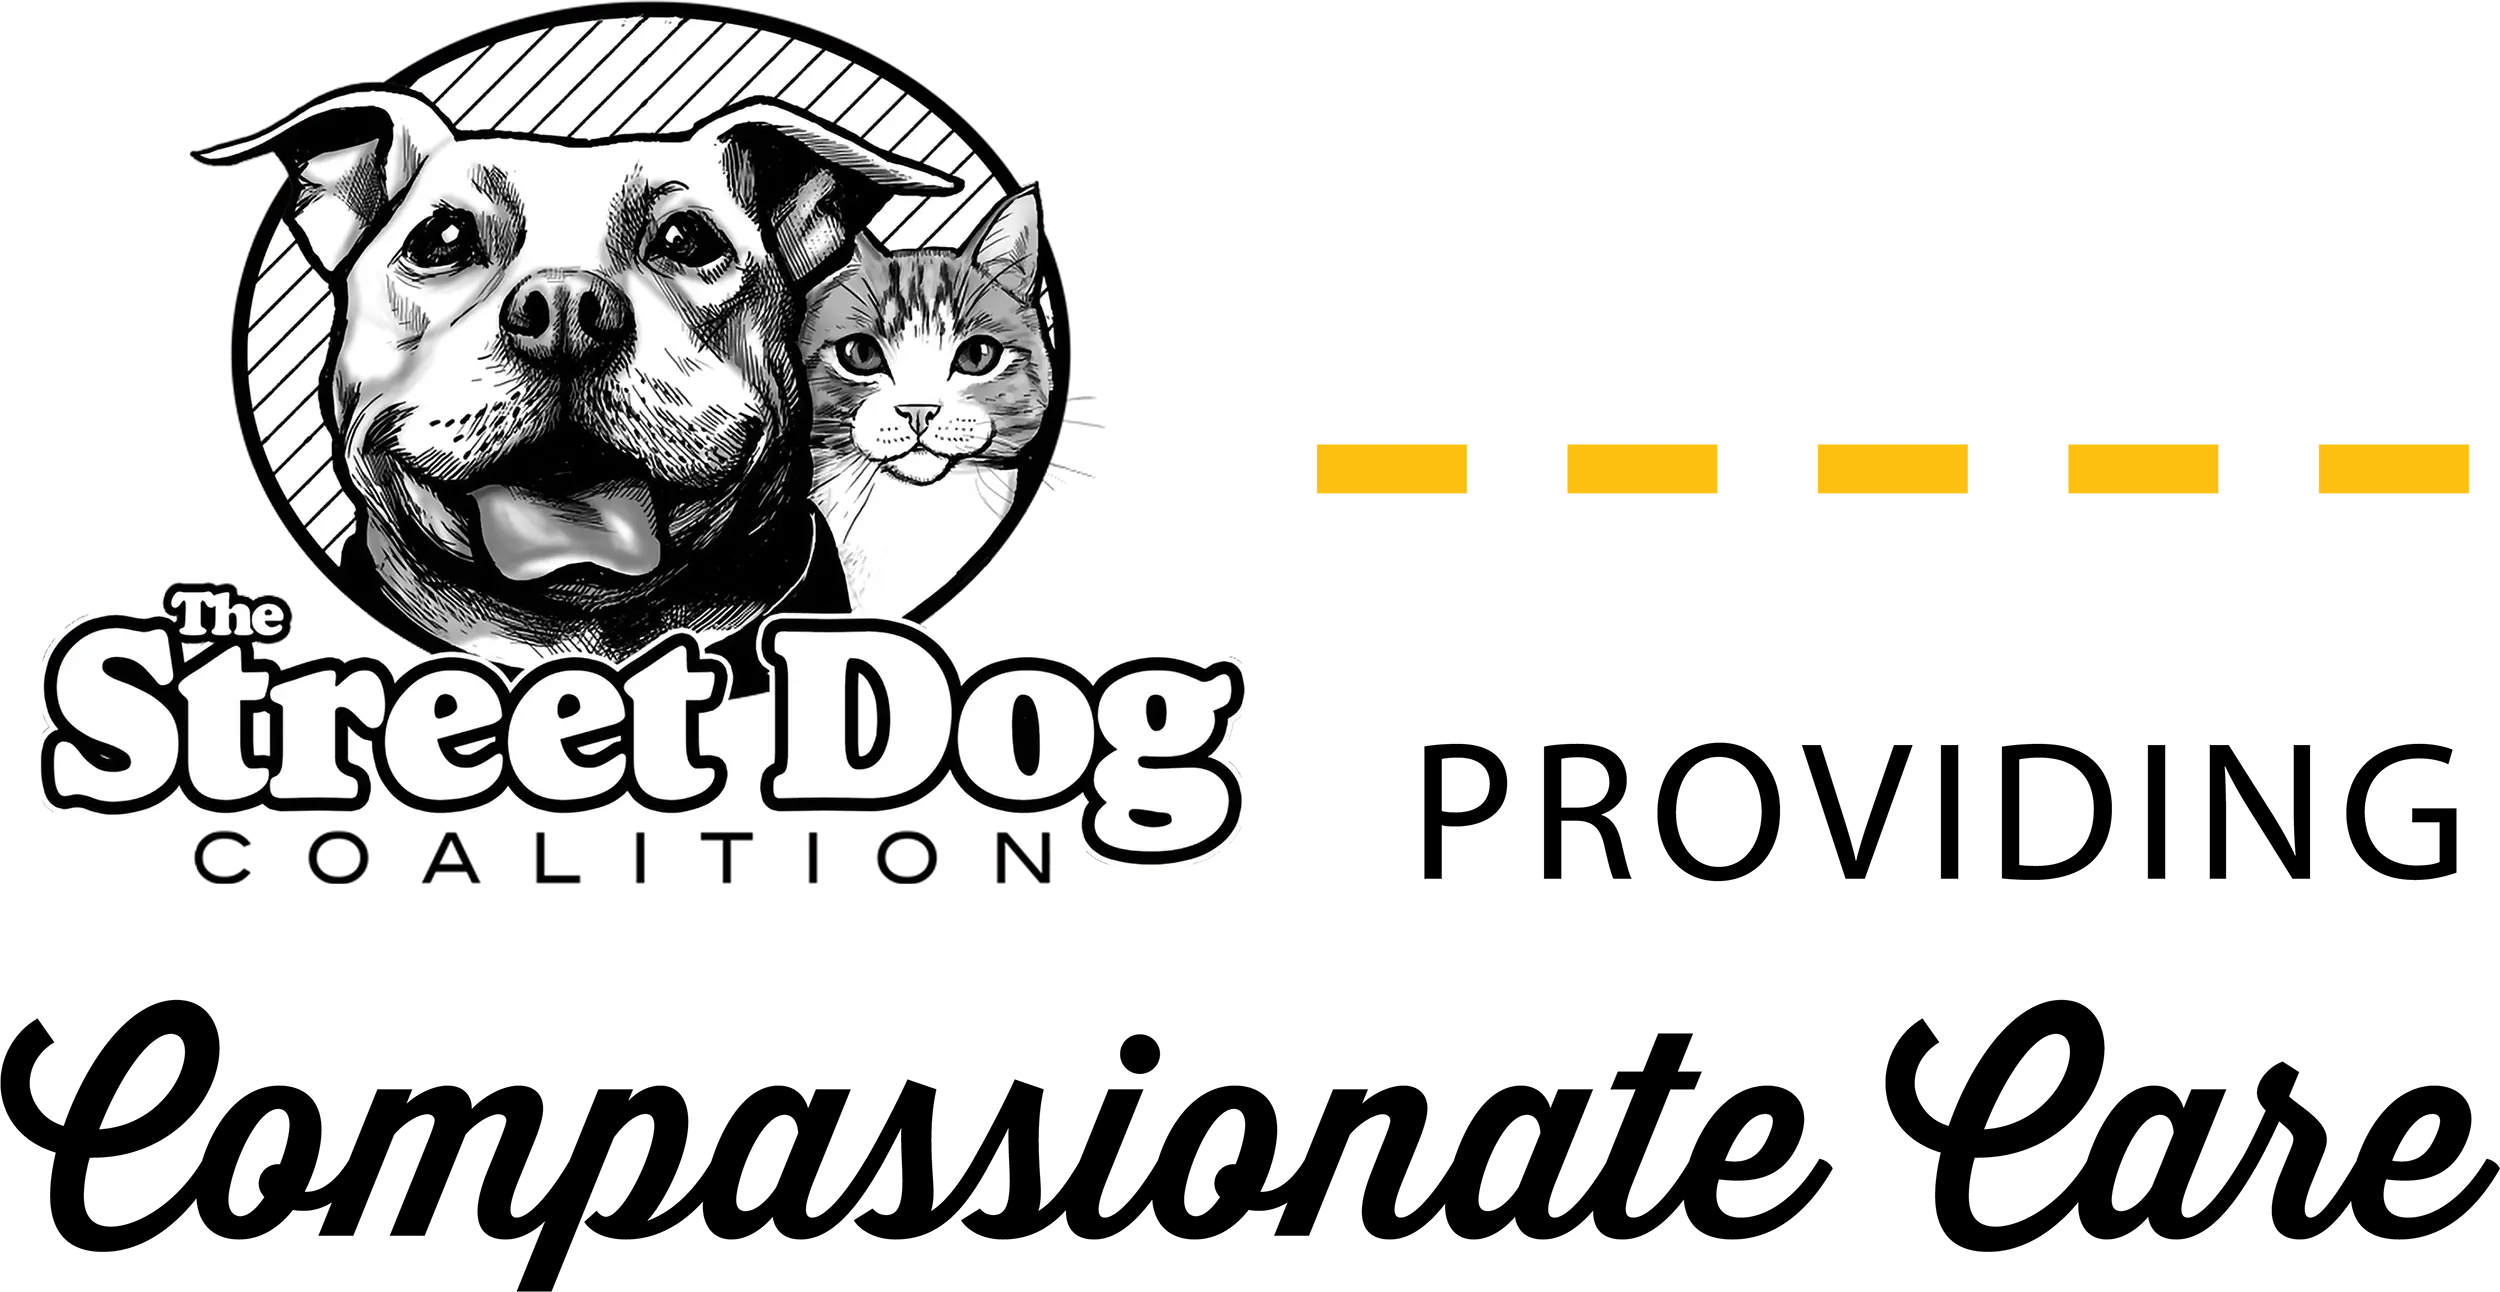 The Street Dog Coalition: Providing Compassionate Care typographic title